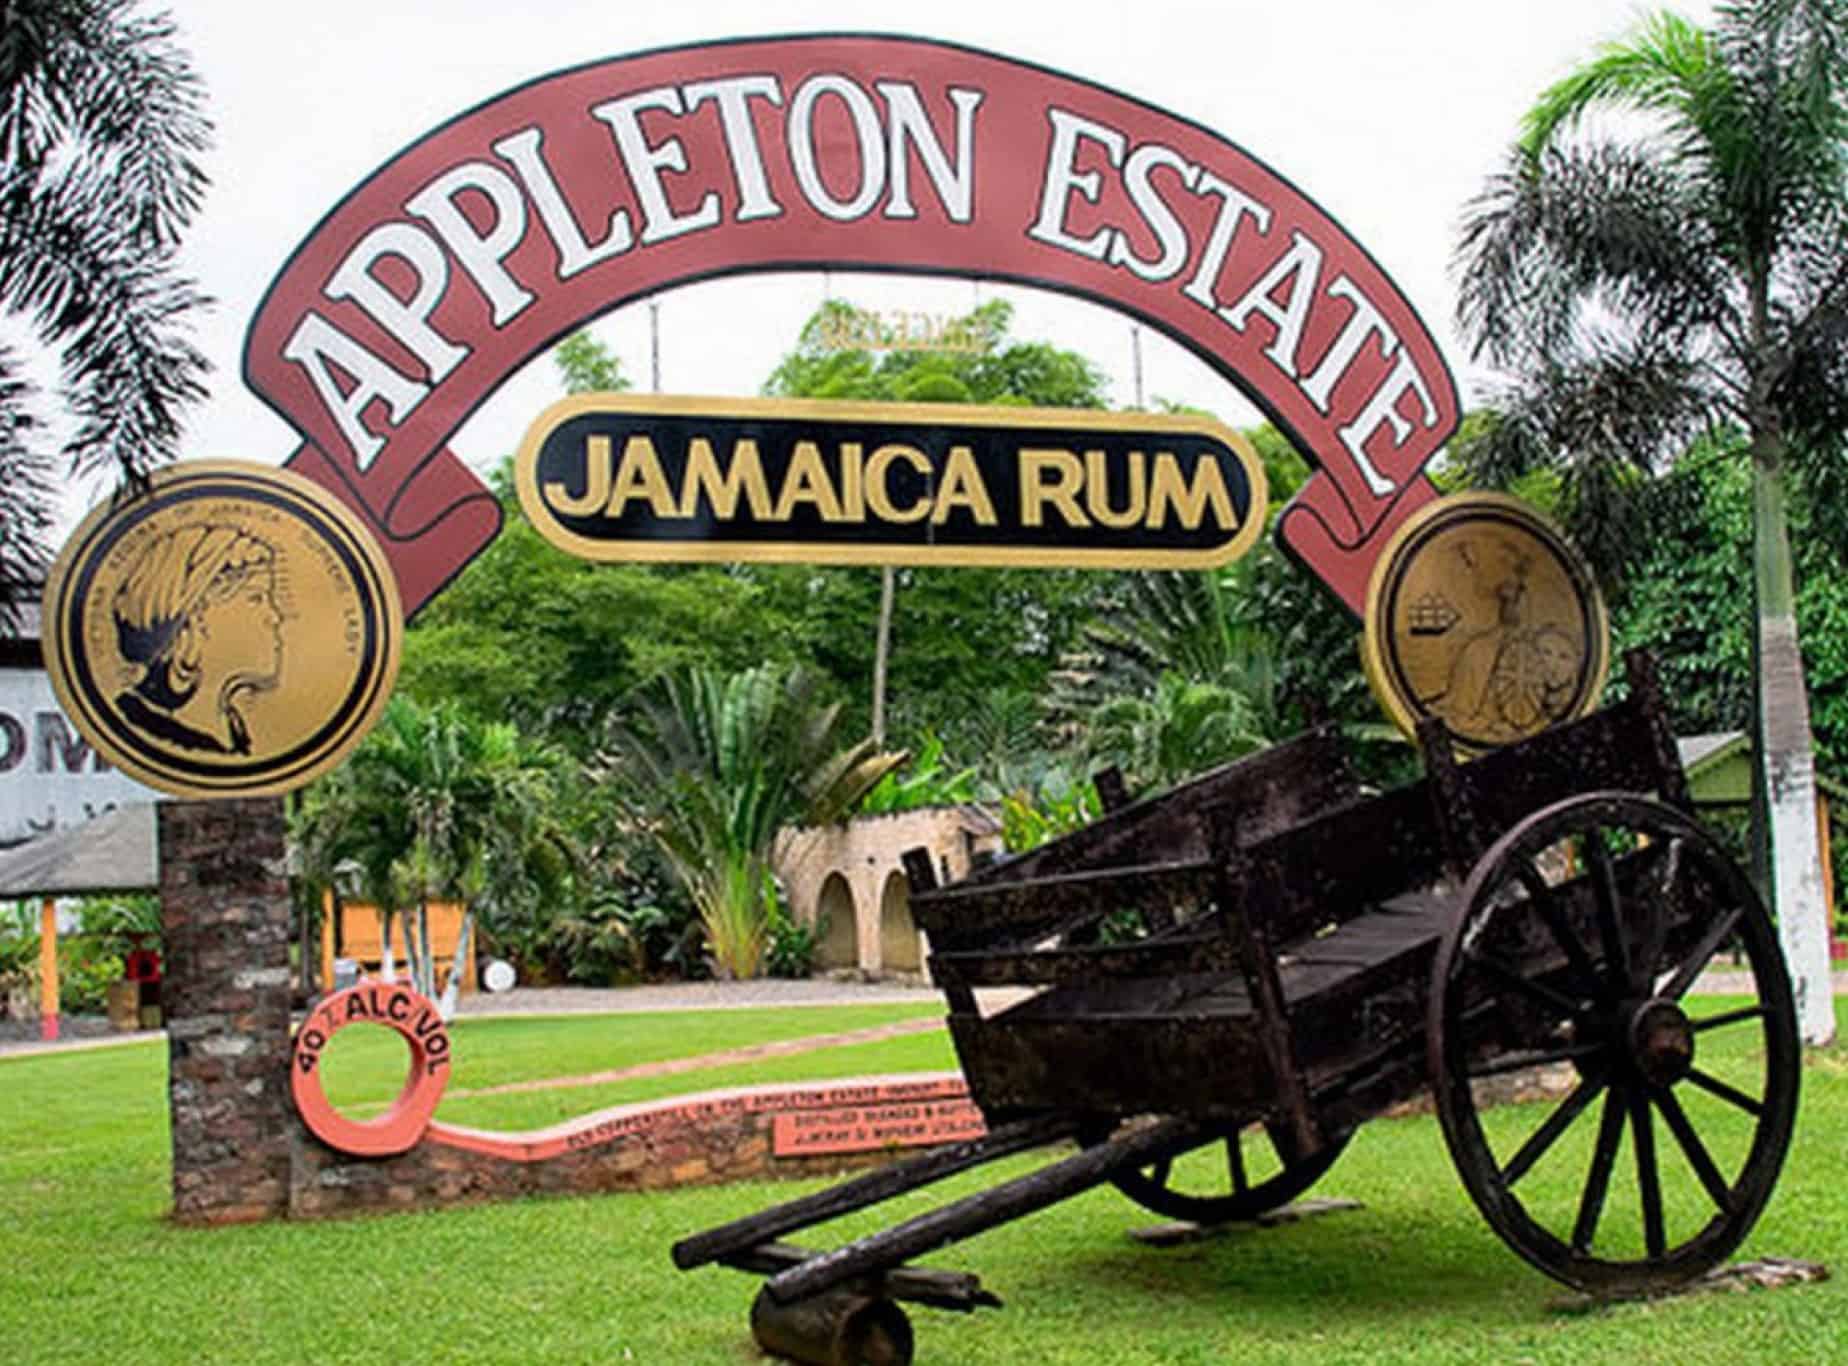 Appleton Estate Rum or YS Falls Tour from Montego Bay Cruise